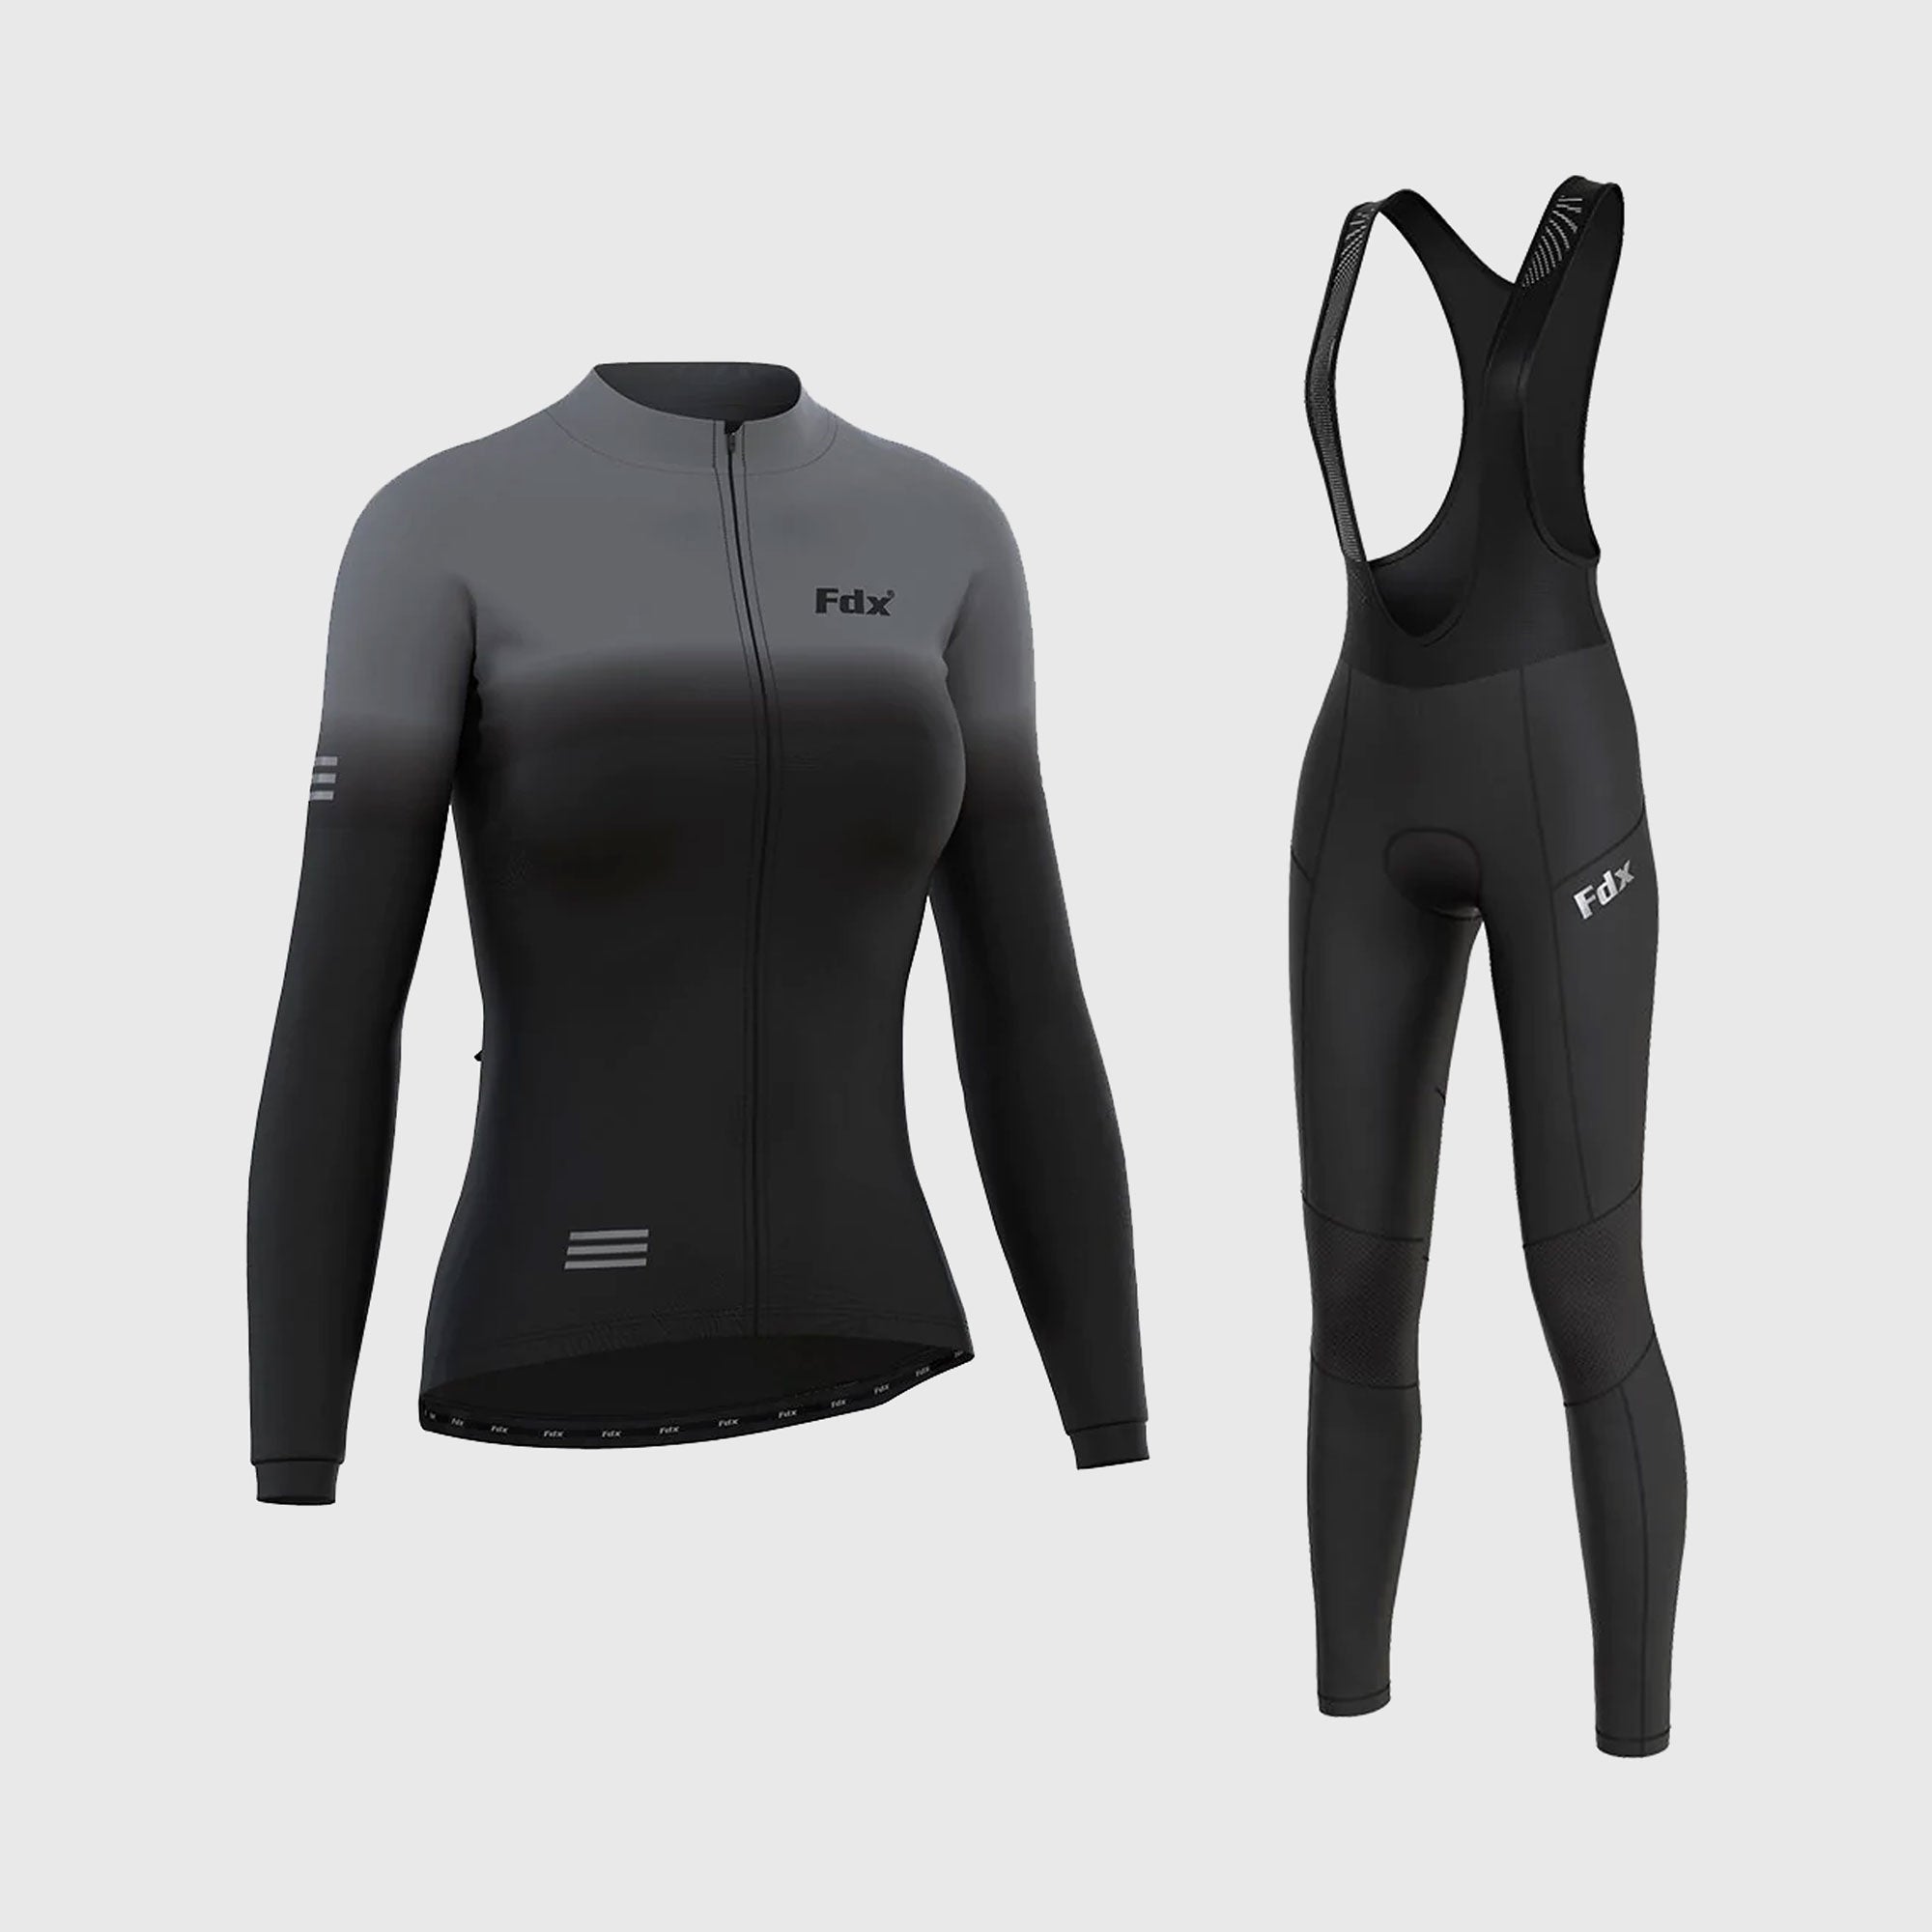 Fdx Women's Set Duo Thermal Long Sleeve Cycling Jersey & Bib Tights - Black / Grey